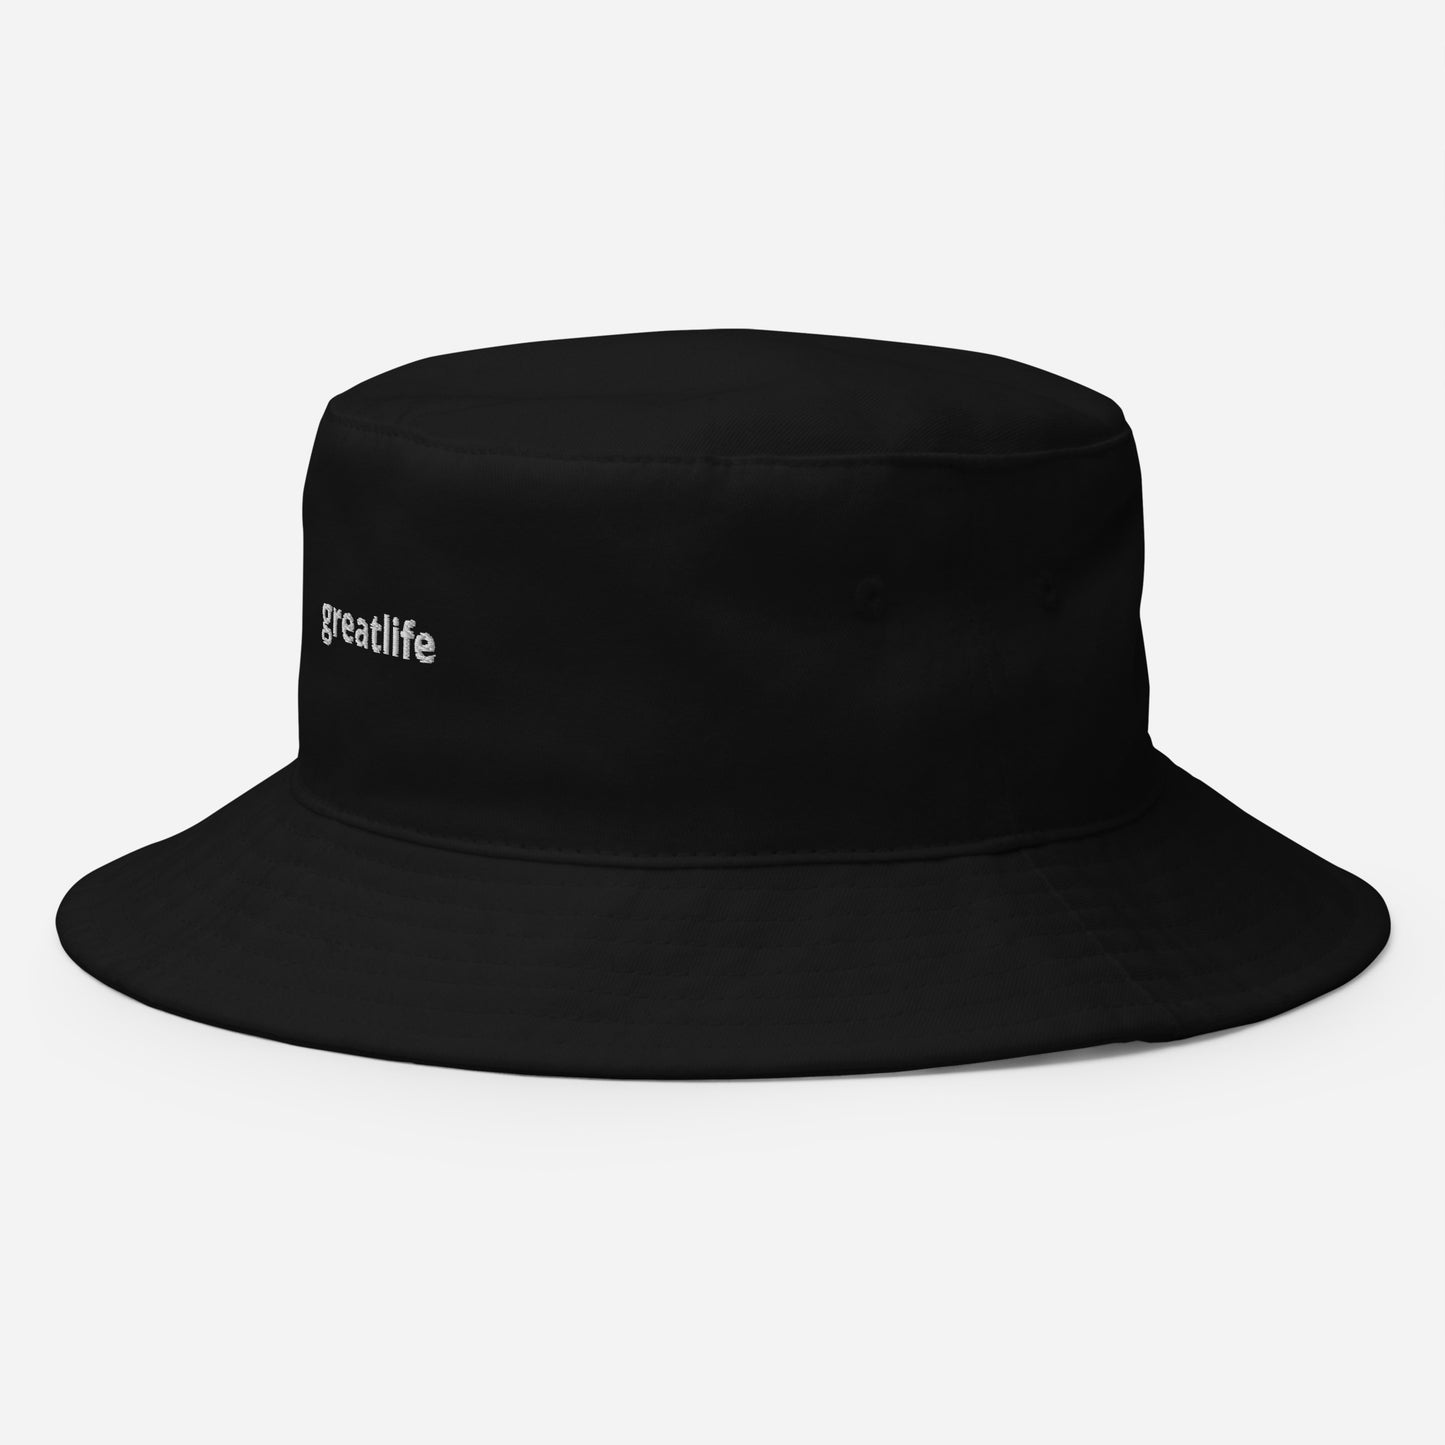 greatlife simple/subtle Bucket Hat